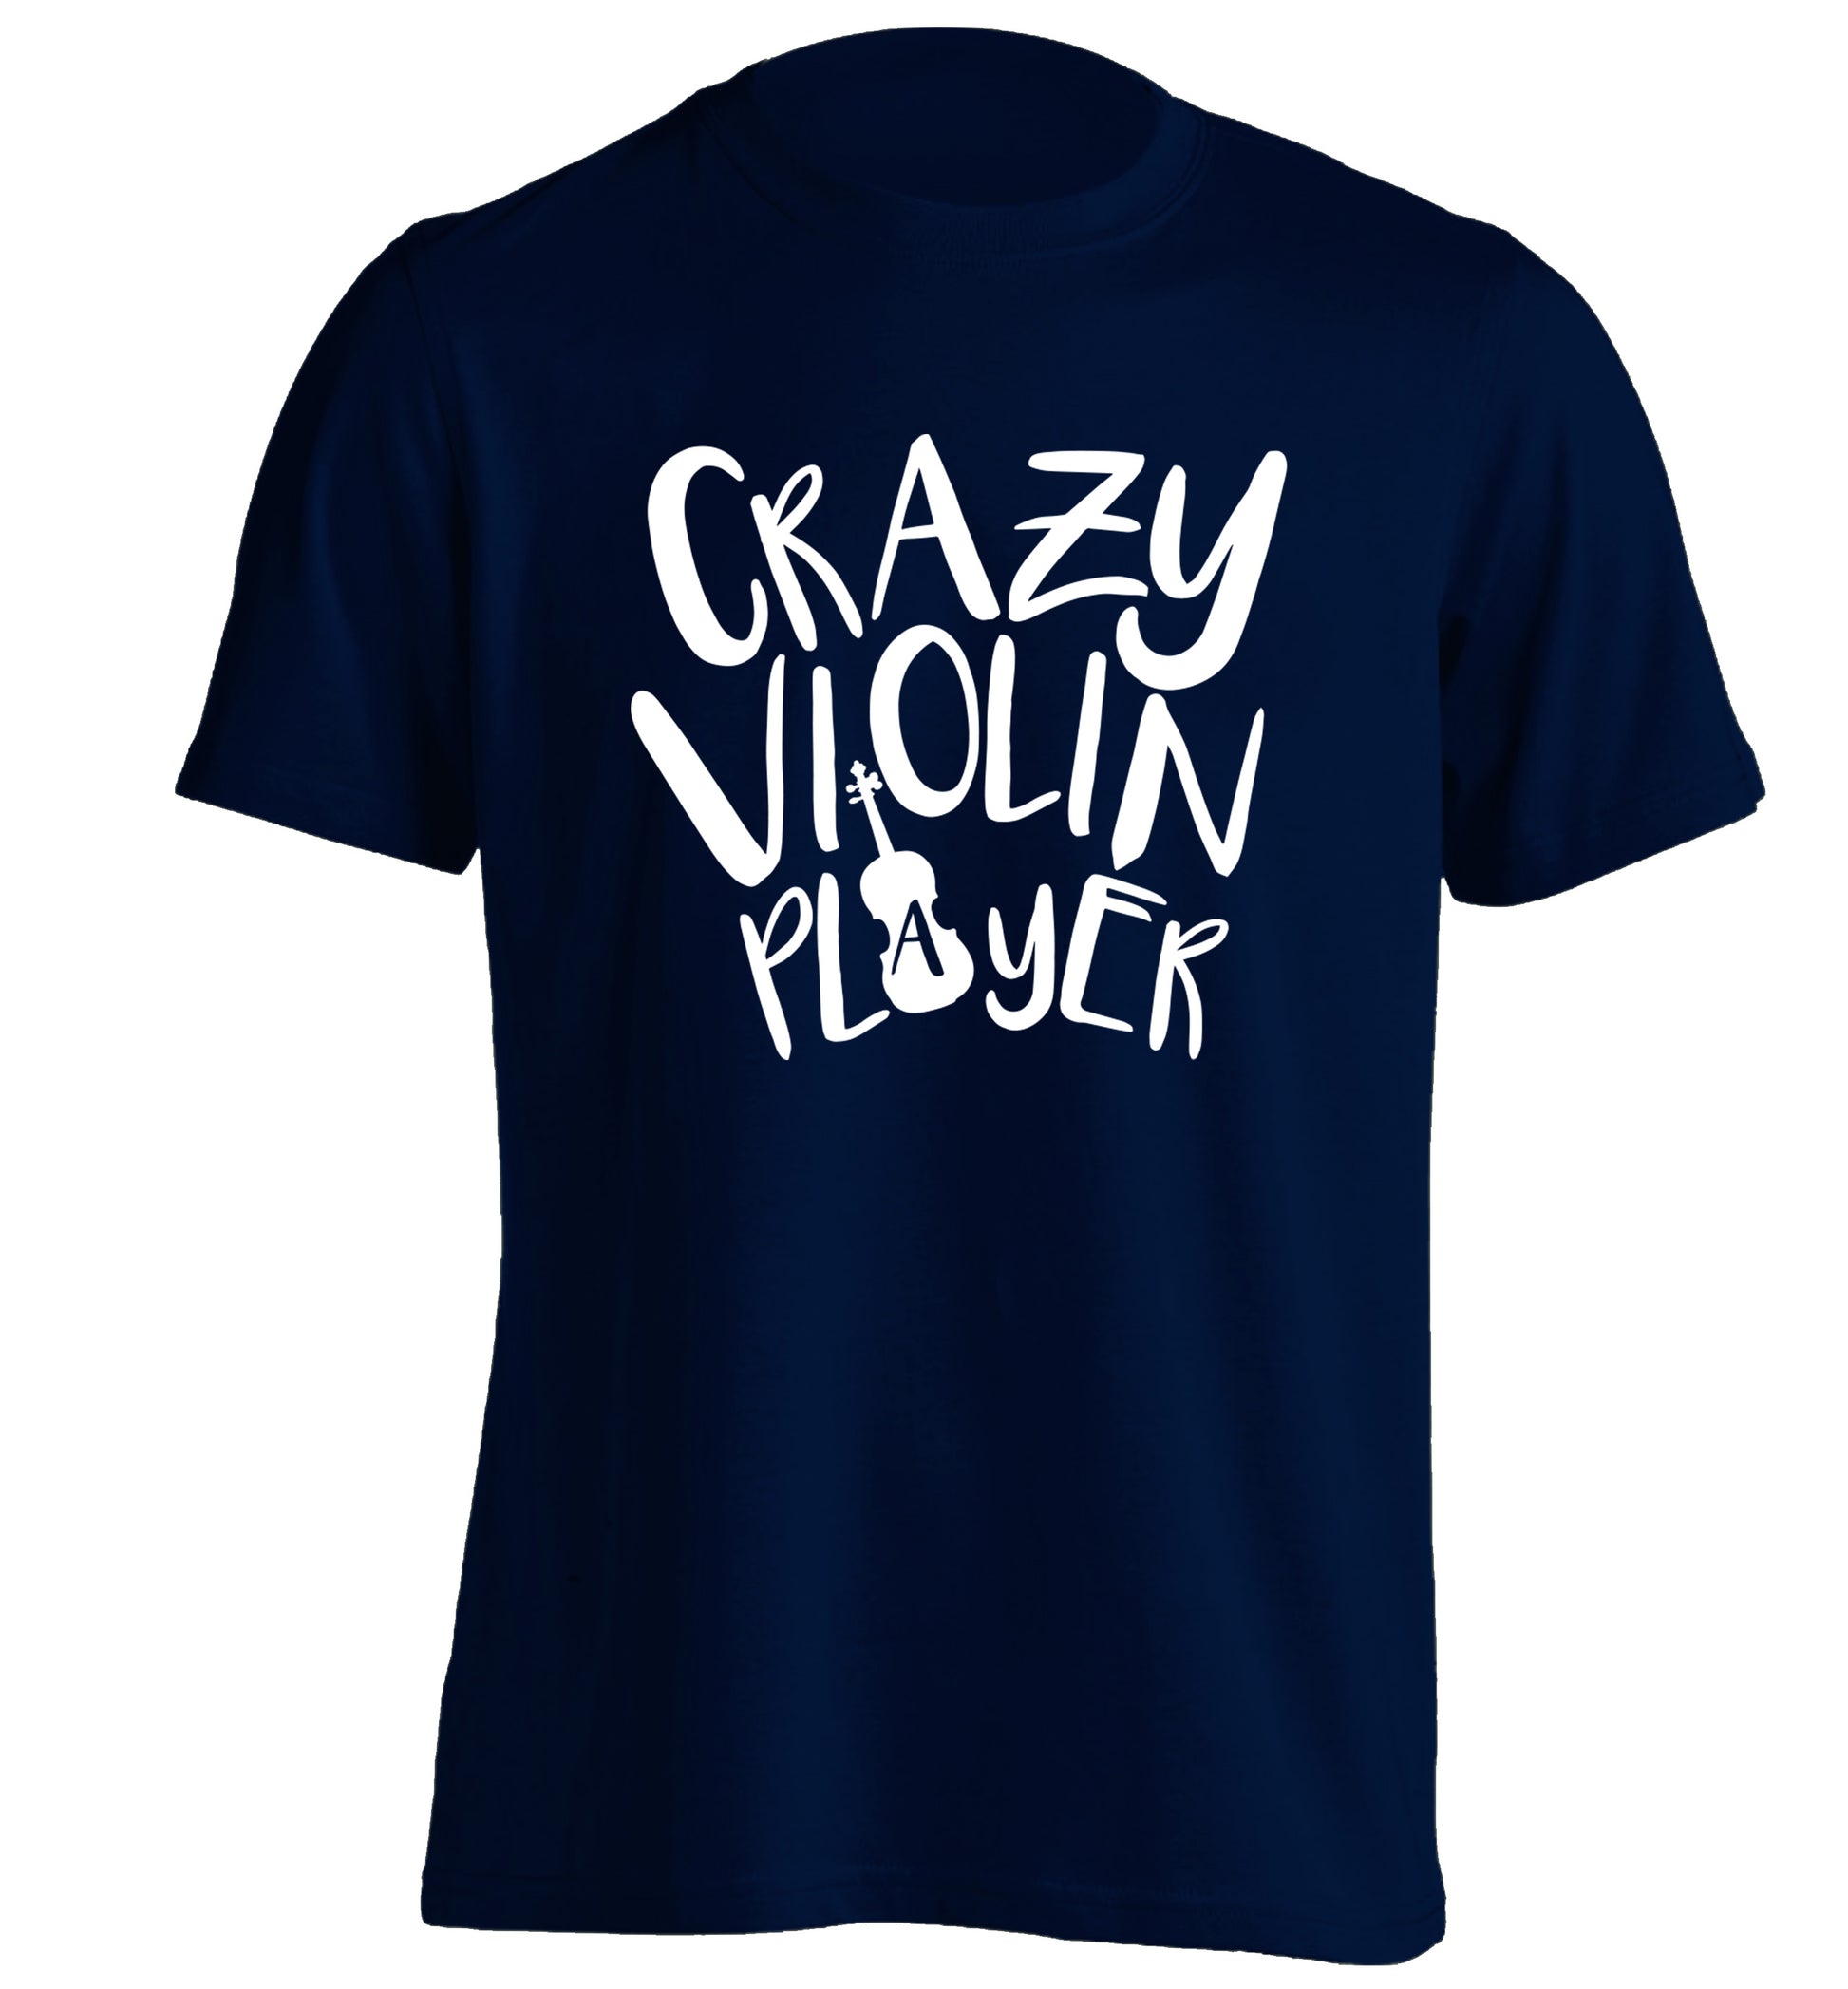 Crazy Violin Player adults unisex navy Tshirt 2XL